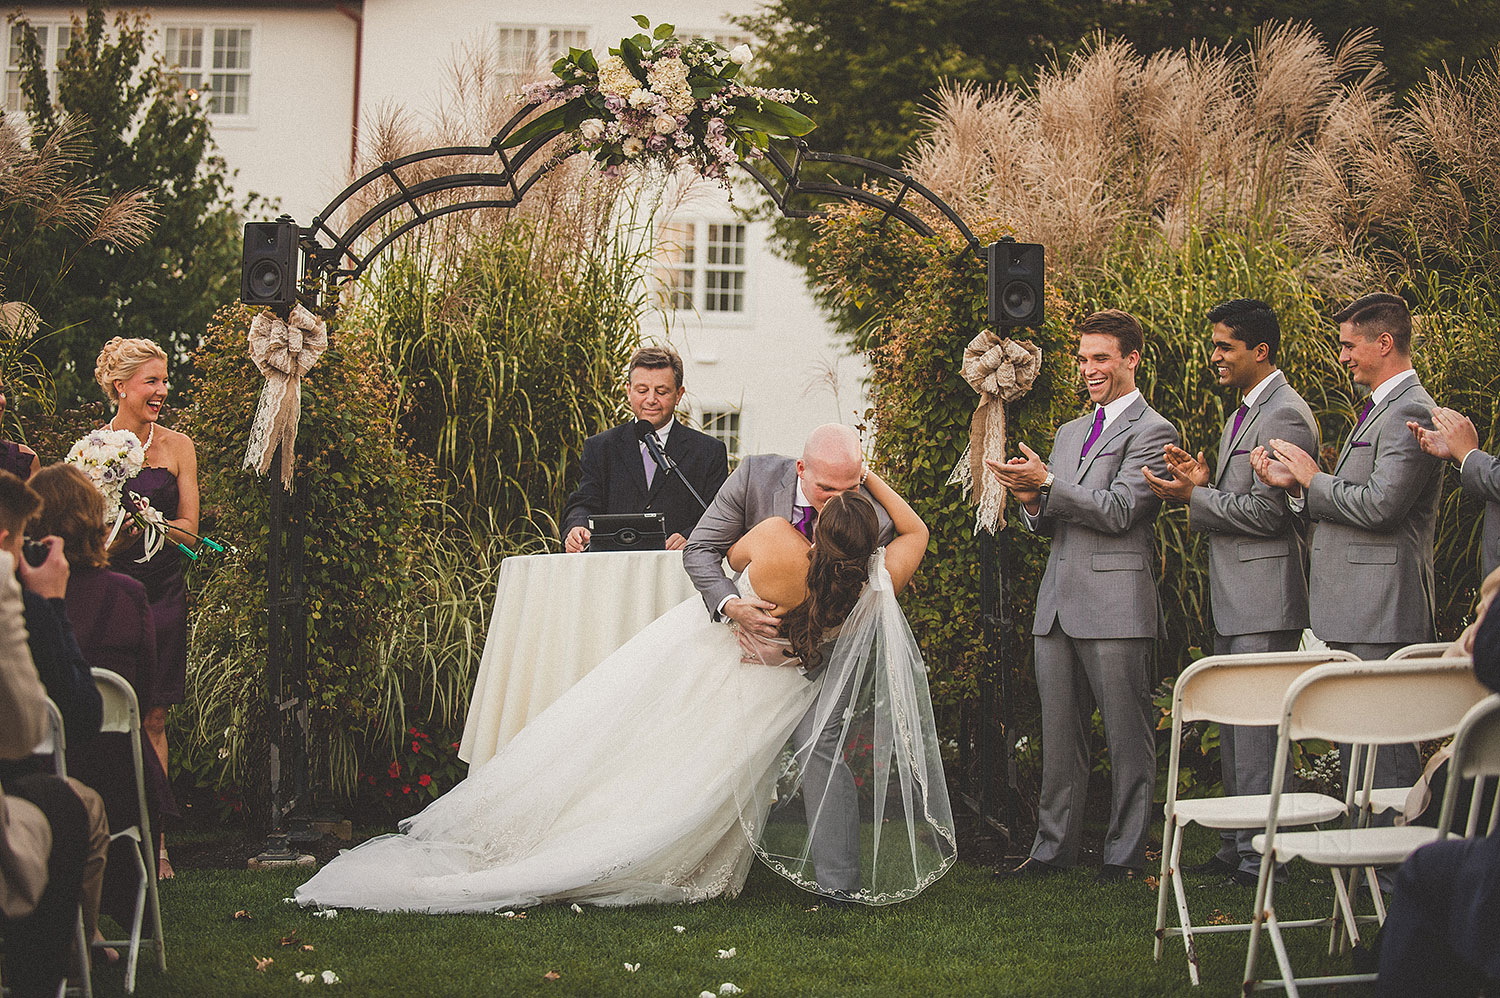 pat-robinson-photography-normandy-farm-wedding-15.jpg